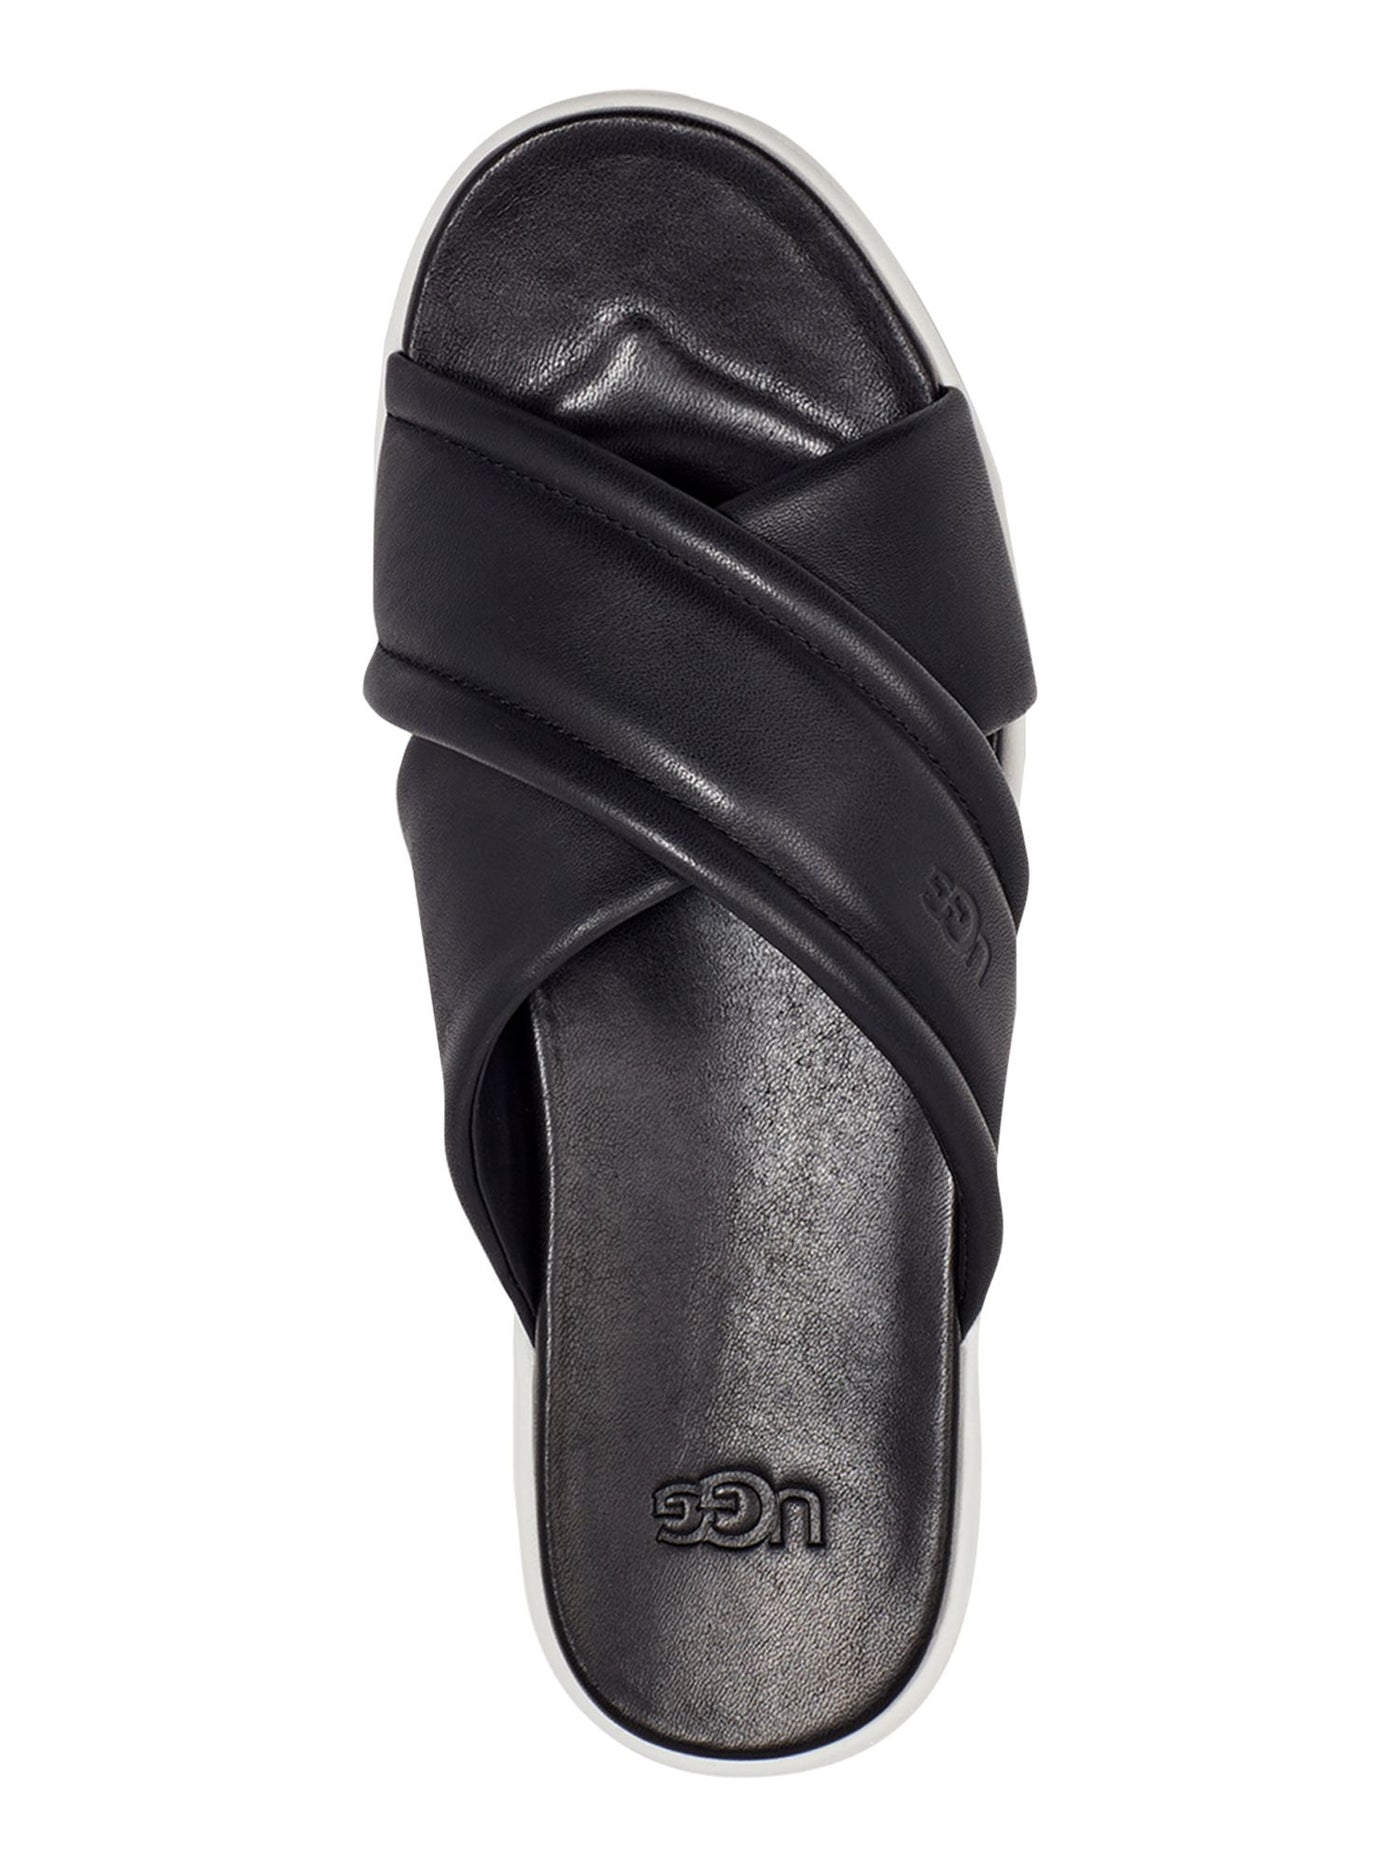 UGG Womens Black Goring Comfort Zayne Round Toe Wedge Slip On Leather Slide Sandals 7.5